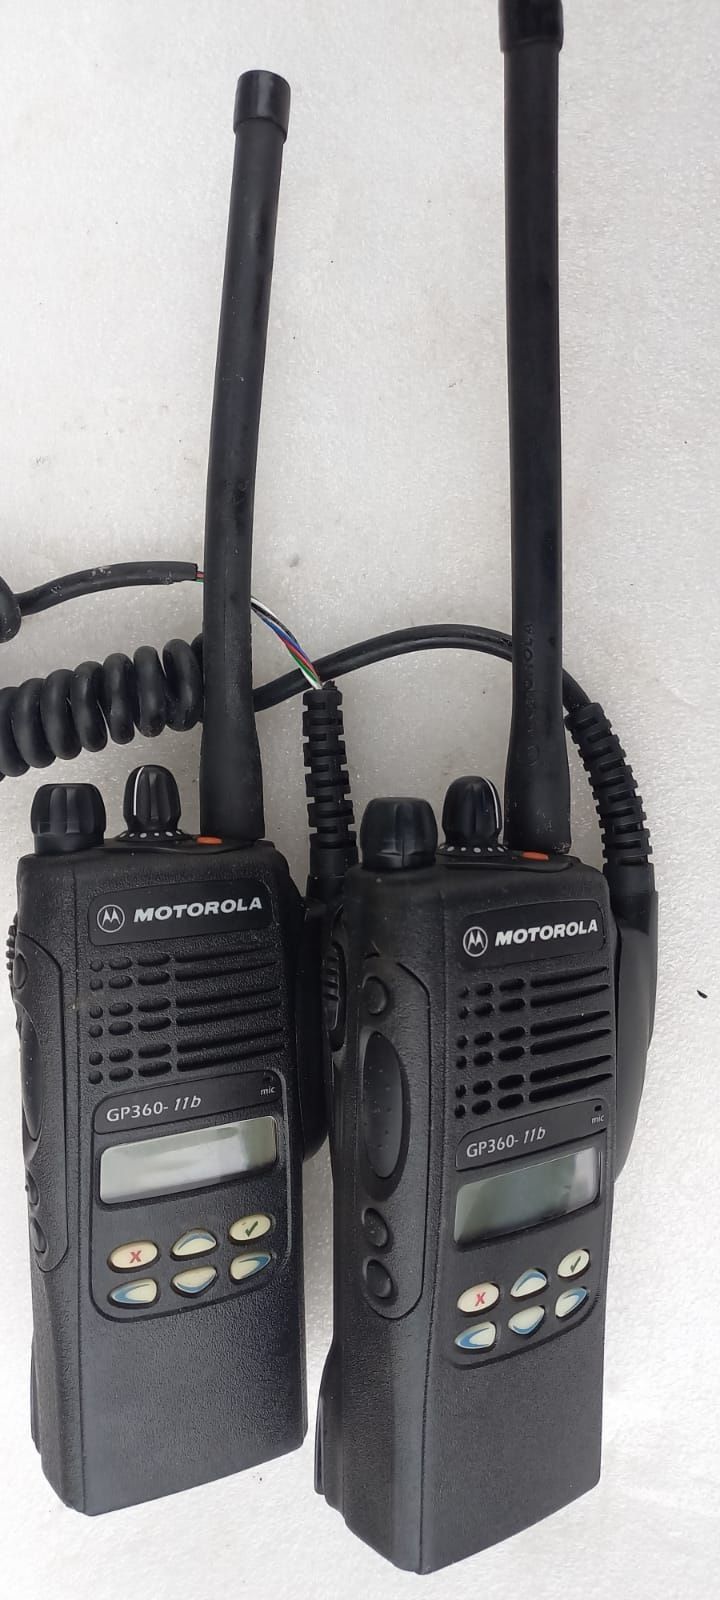 Statie emisie receptie profesionala Motorola GP360-11b originala